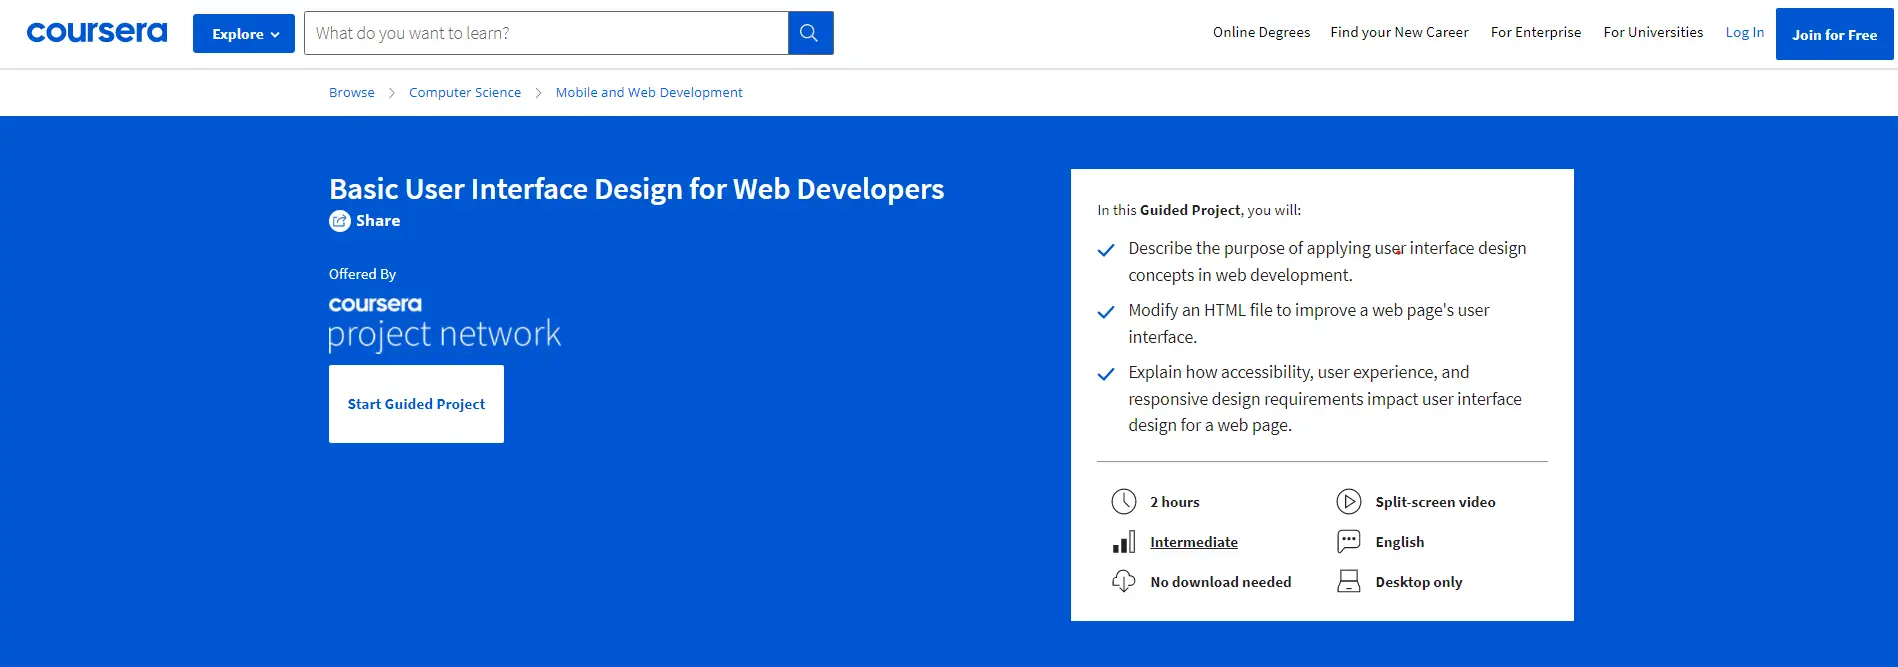 Best Coursera Web Development Courses